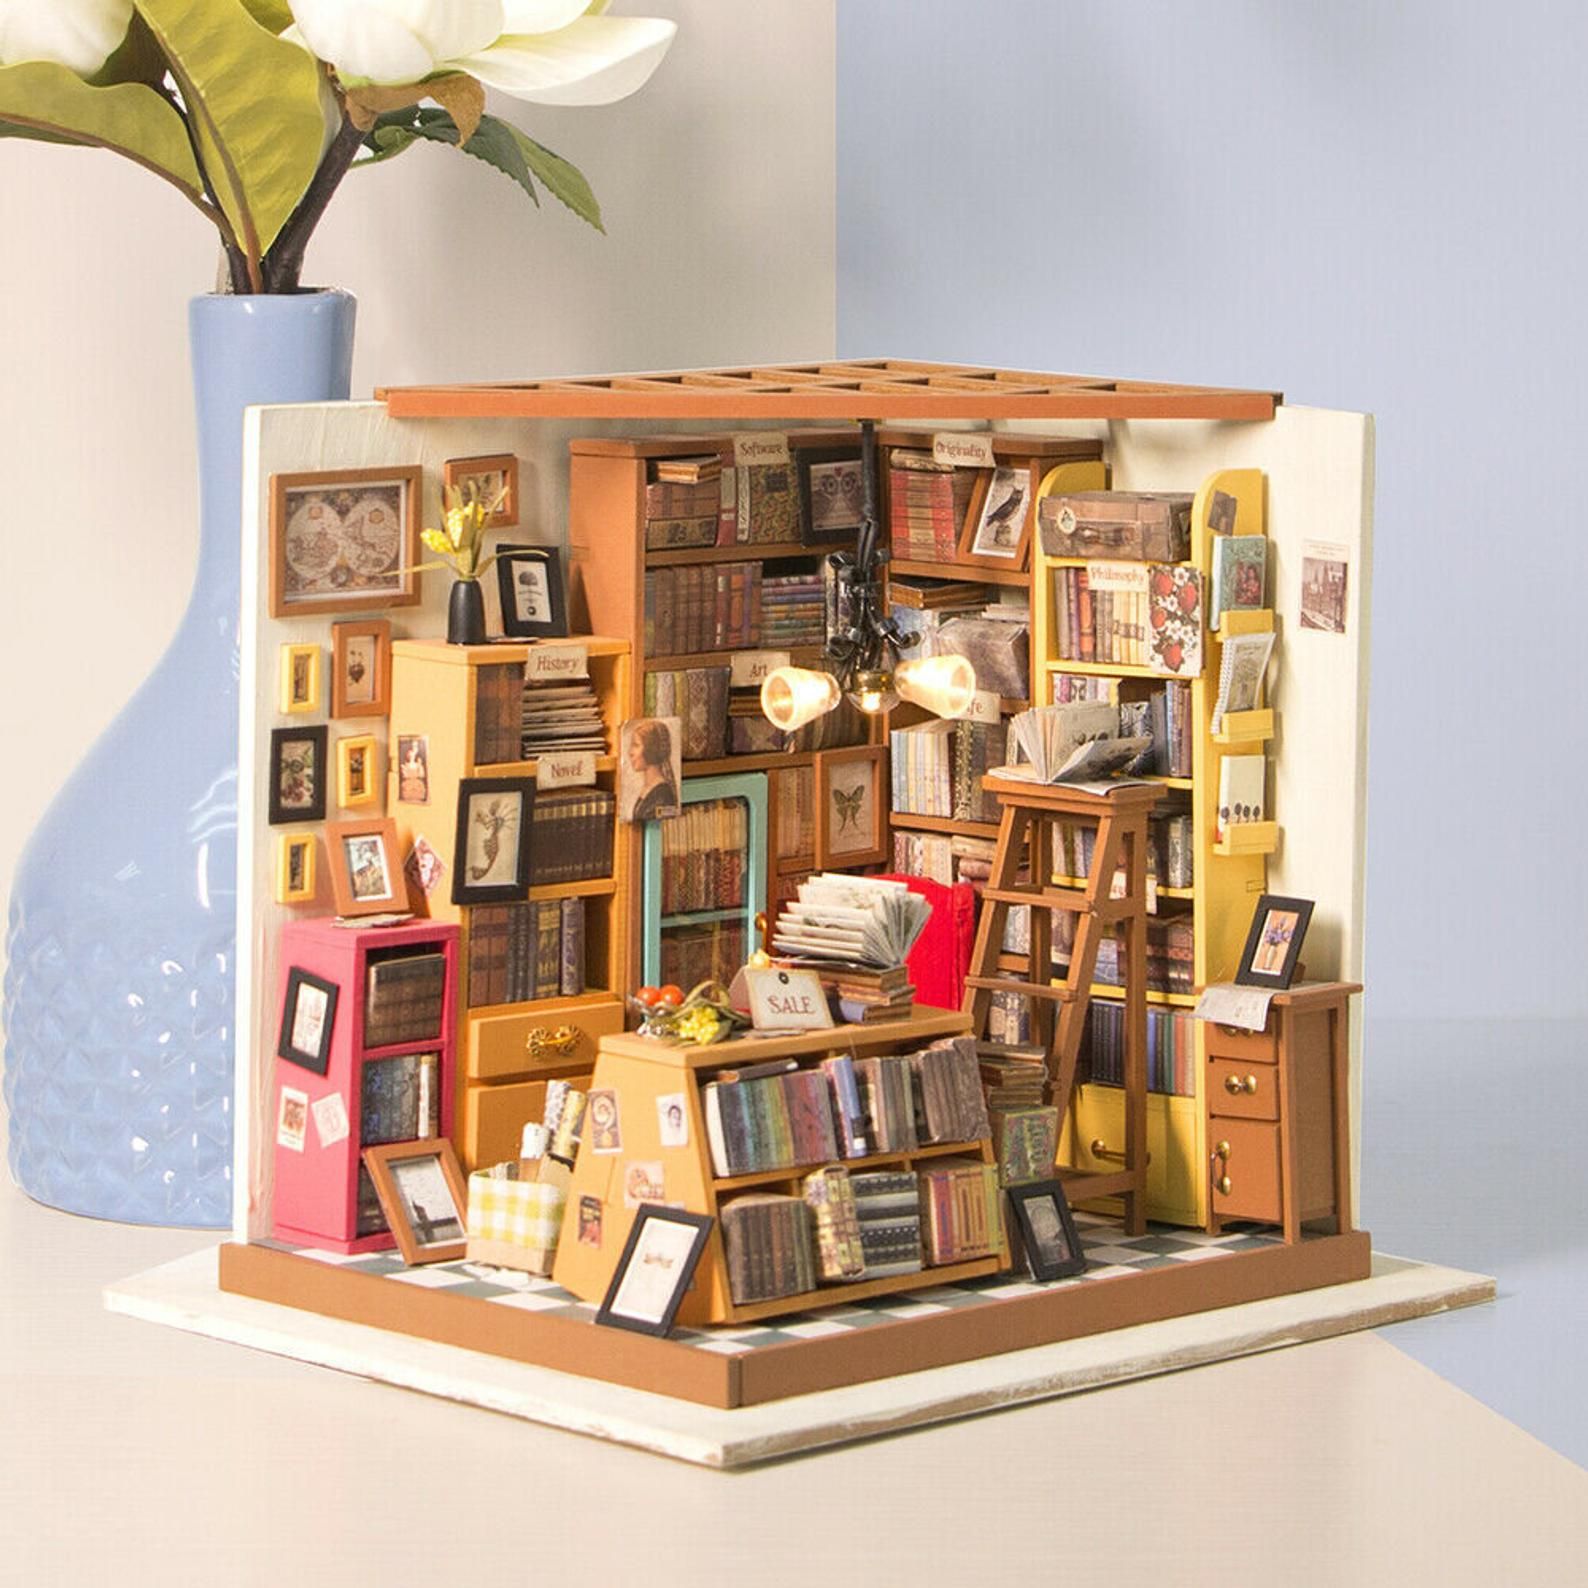 Bookstore diorama